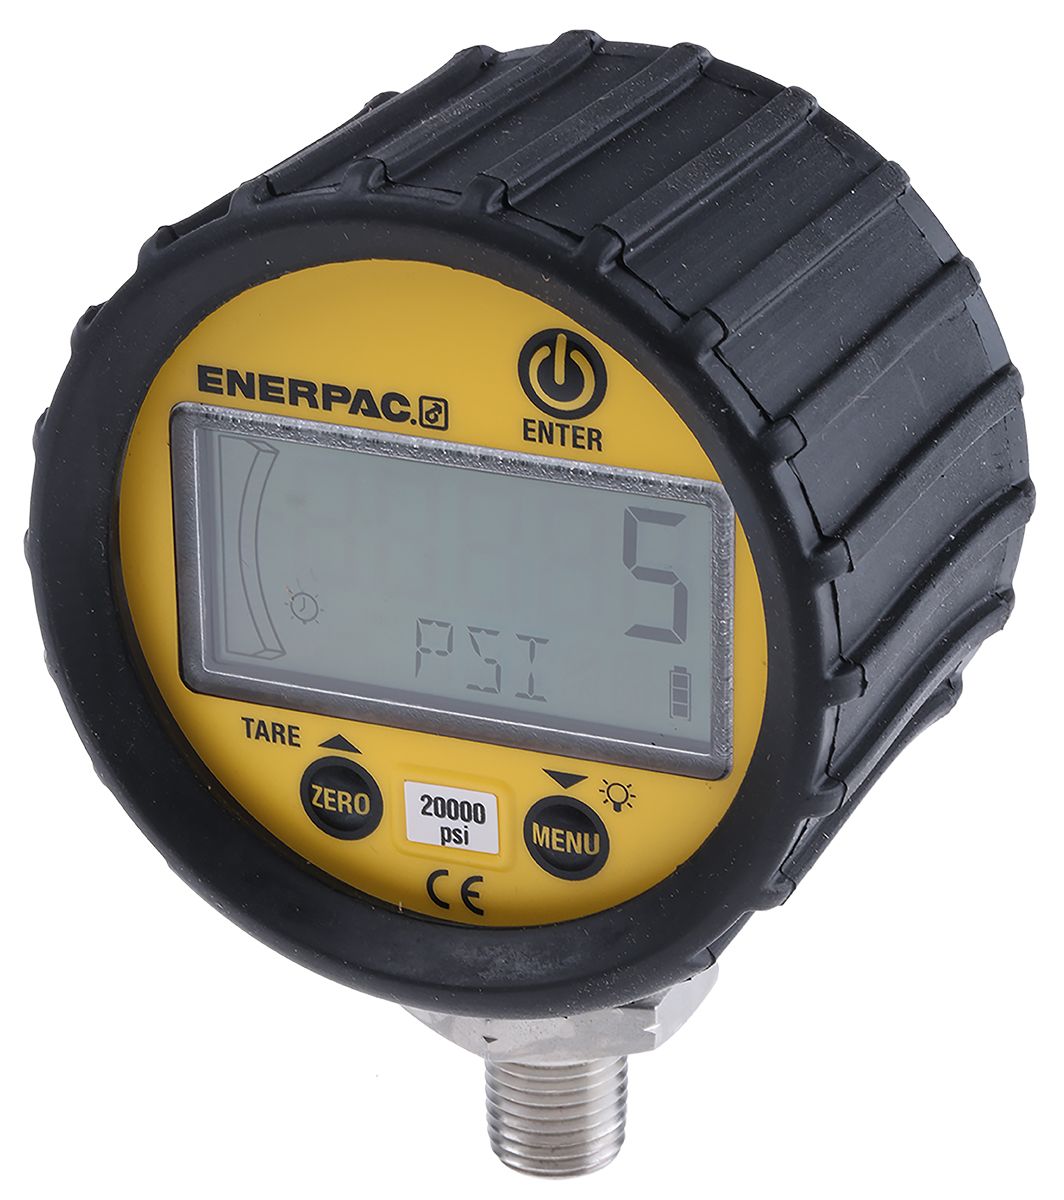 Enerpac G 1/4 Digital Pressure Gauge 1380bar, DGR2, 0bar min.